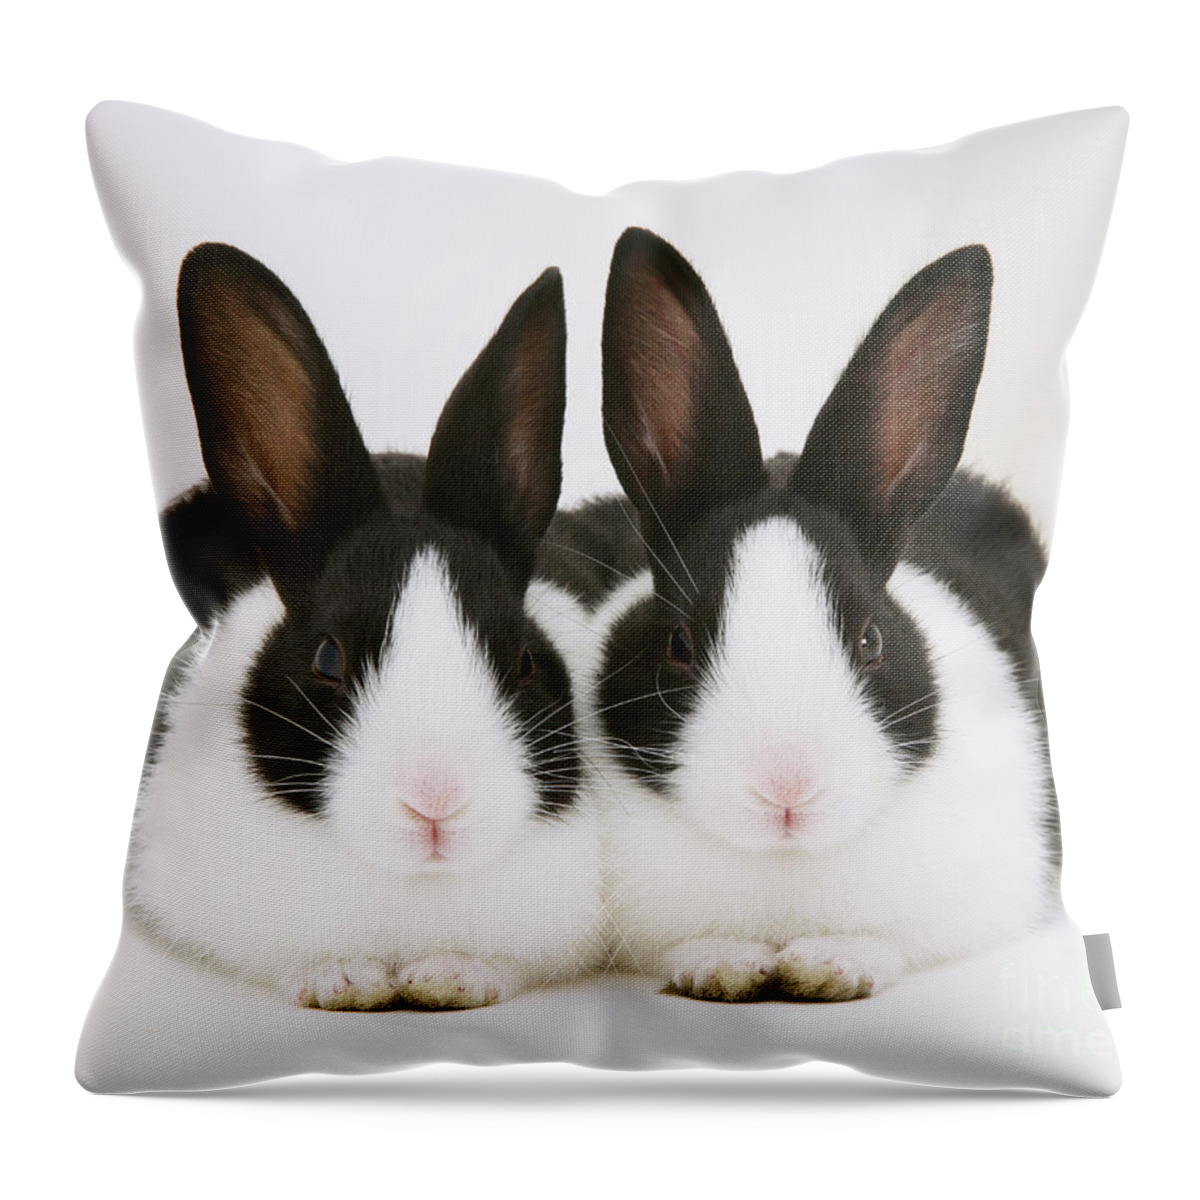 Black-and-white Dutch Rabbit Throw Pillow featuring the photograph Baby Black-and-white Dutch Rabbits by Jane Burton